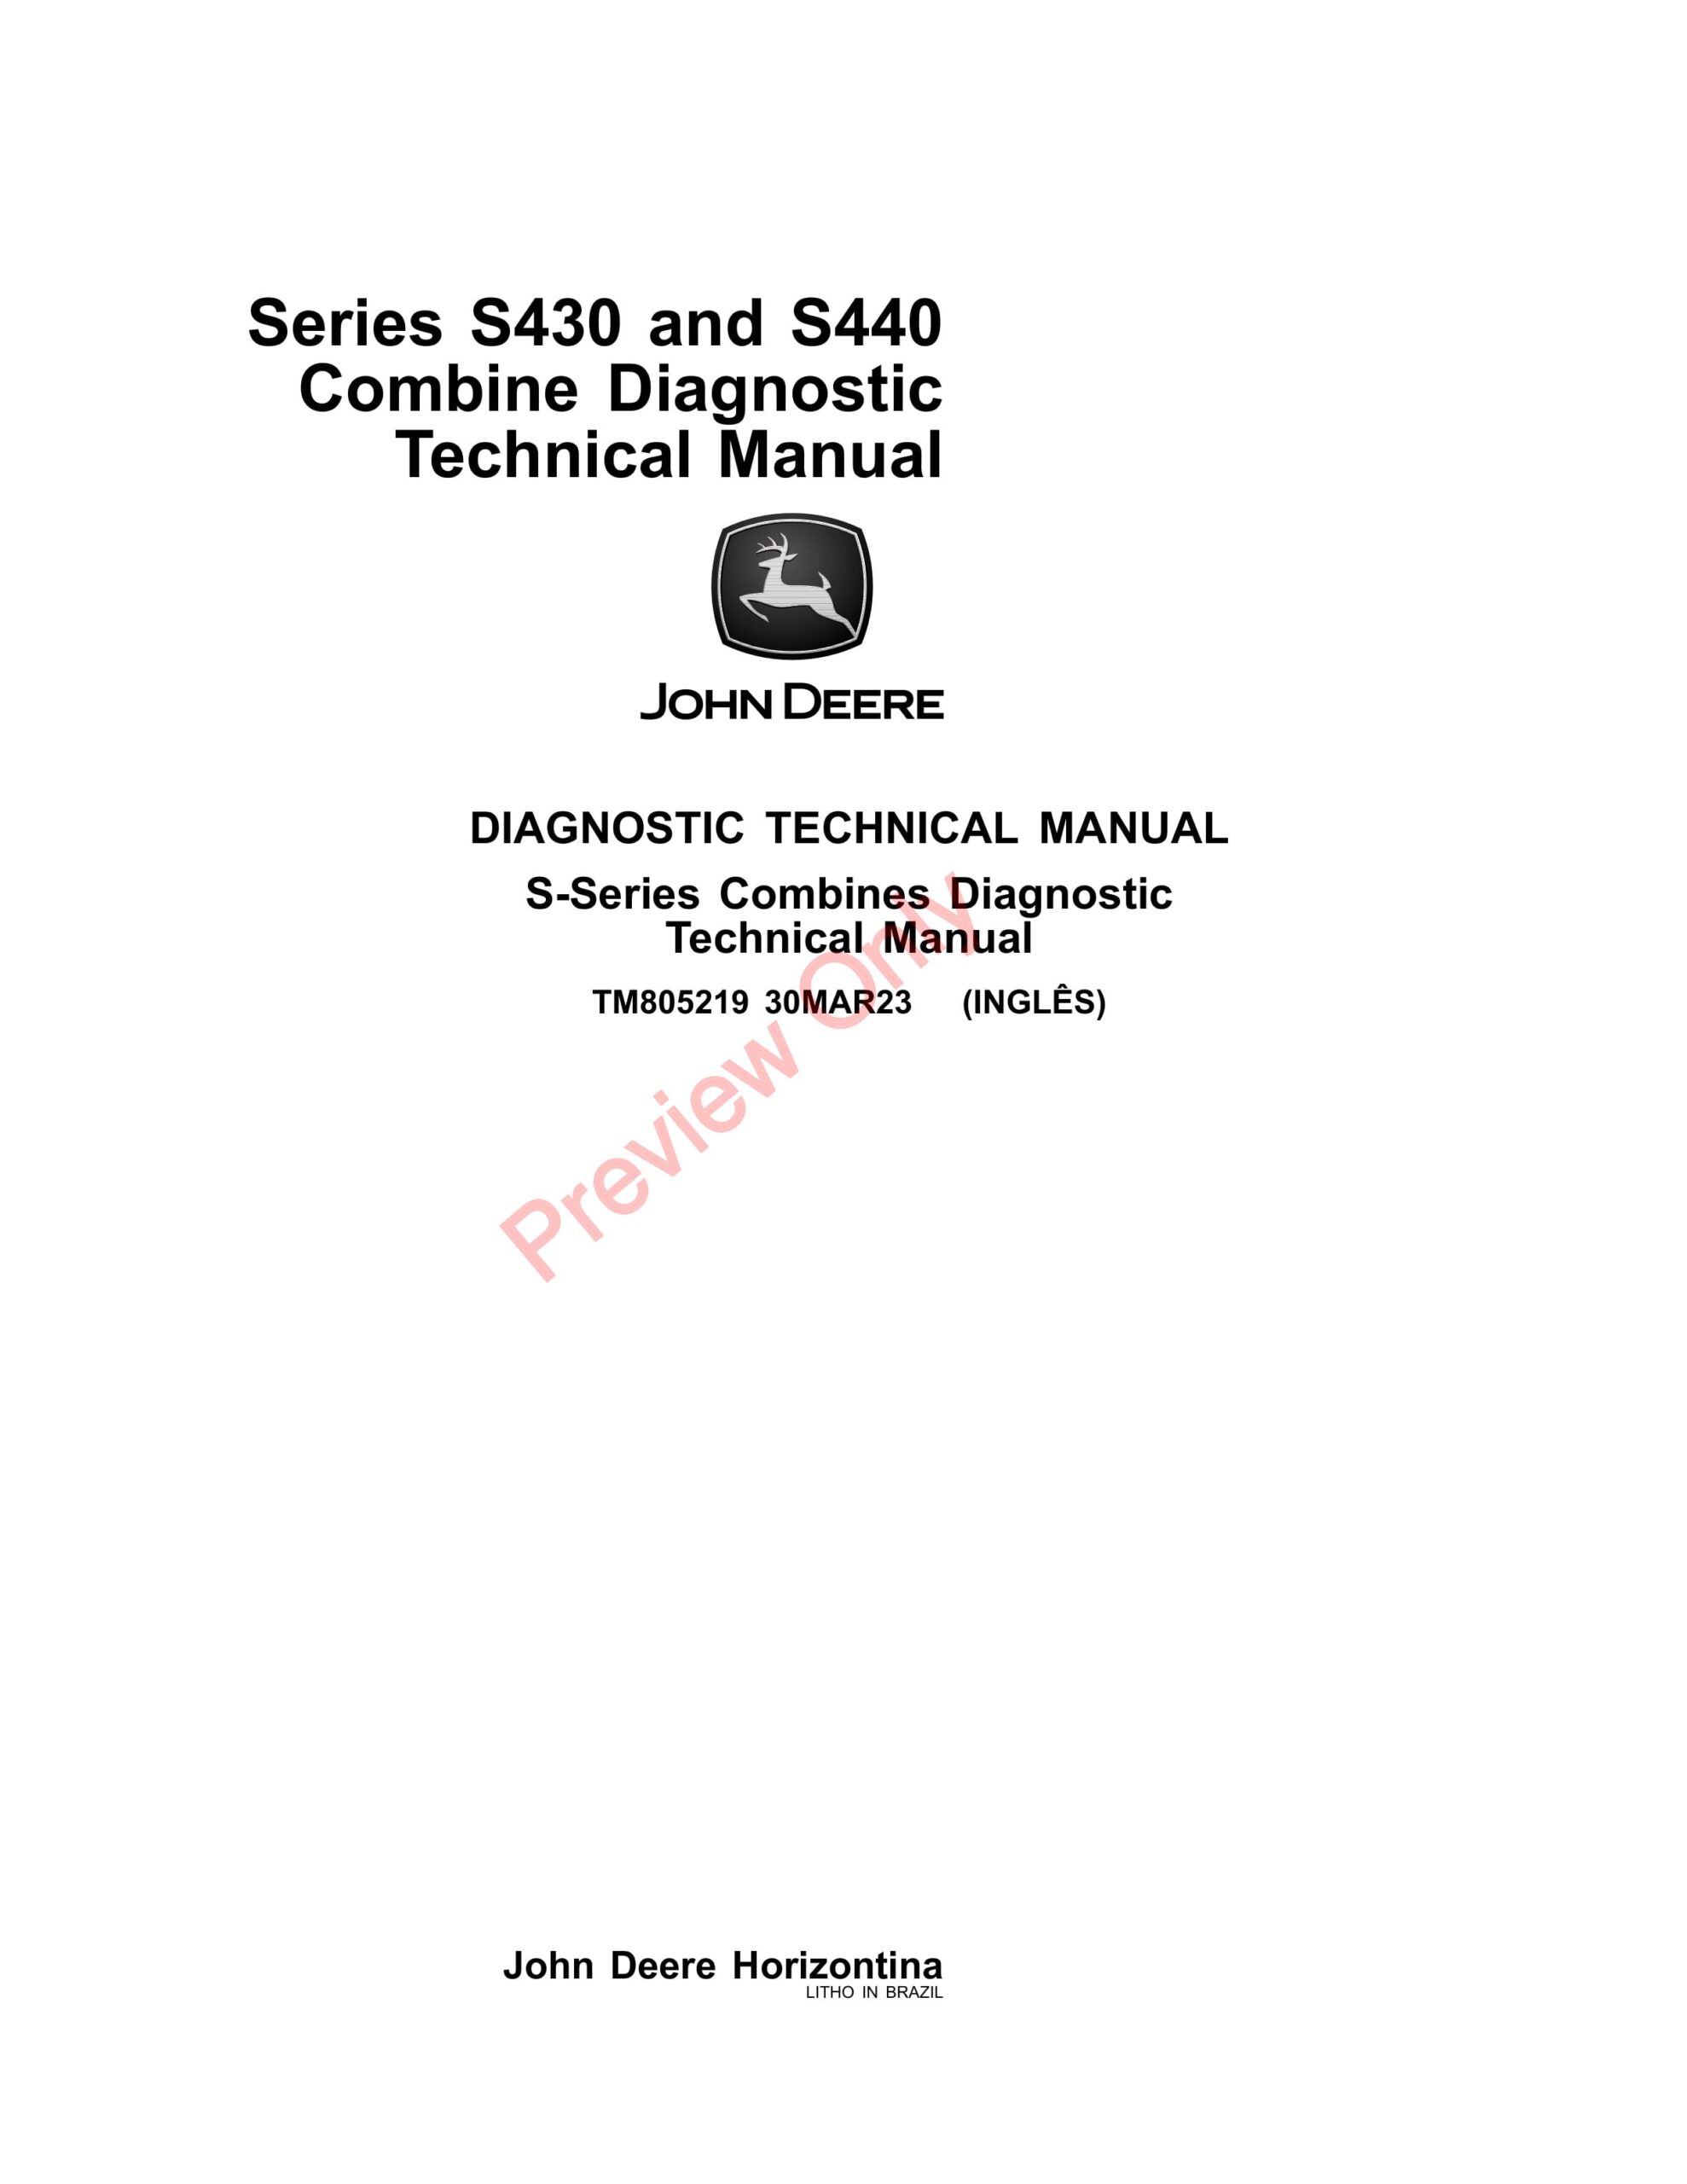 John Deere Series S430 and S440 Combine Diagnostic Technical Manual TM805219 30MAR23-1